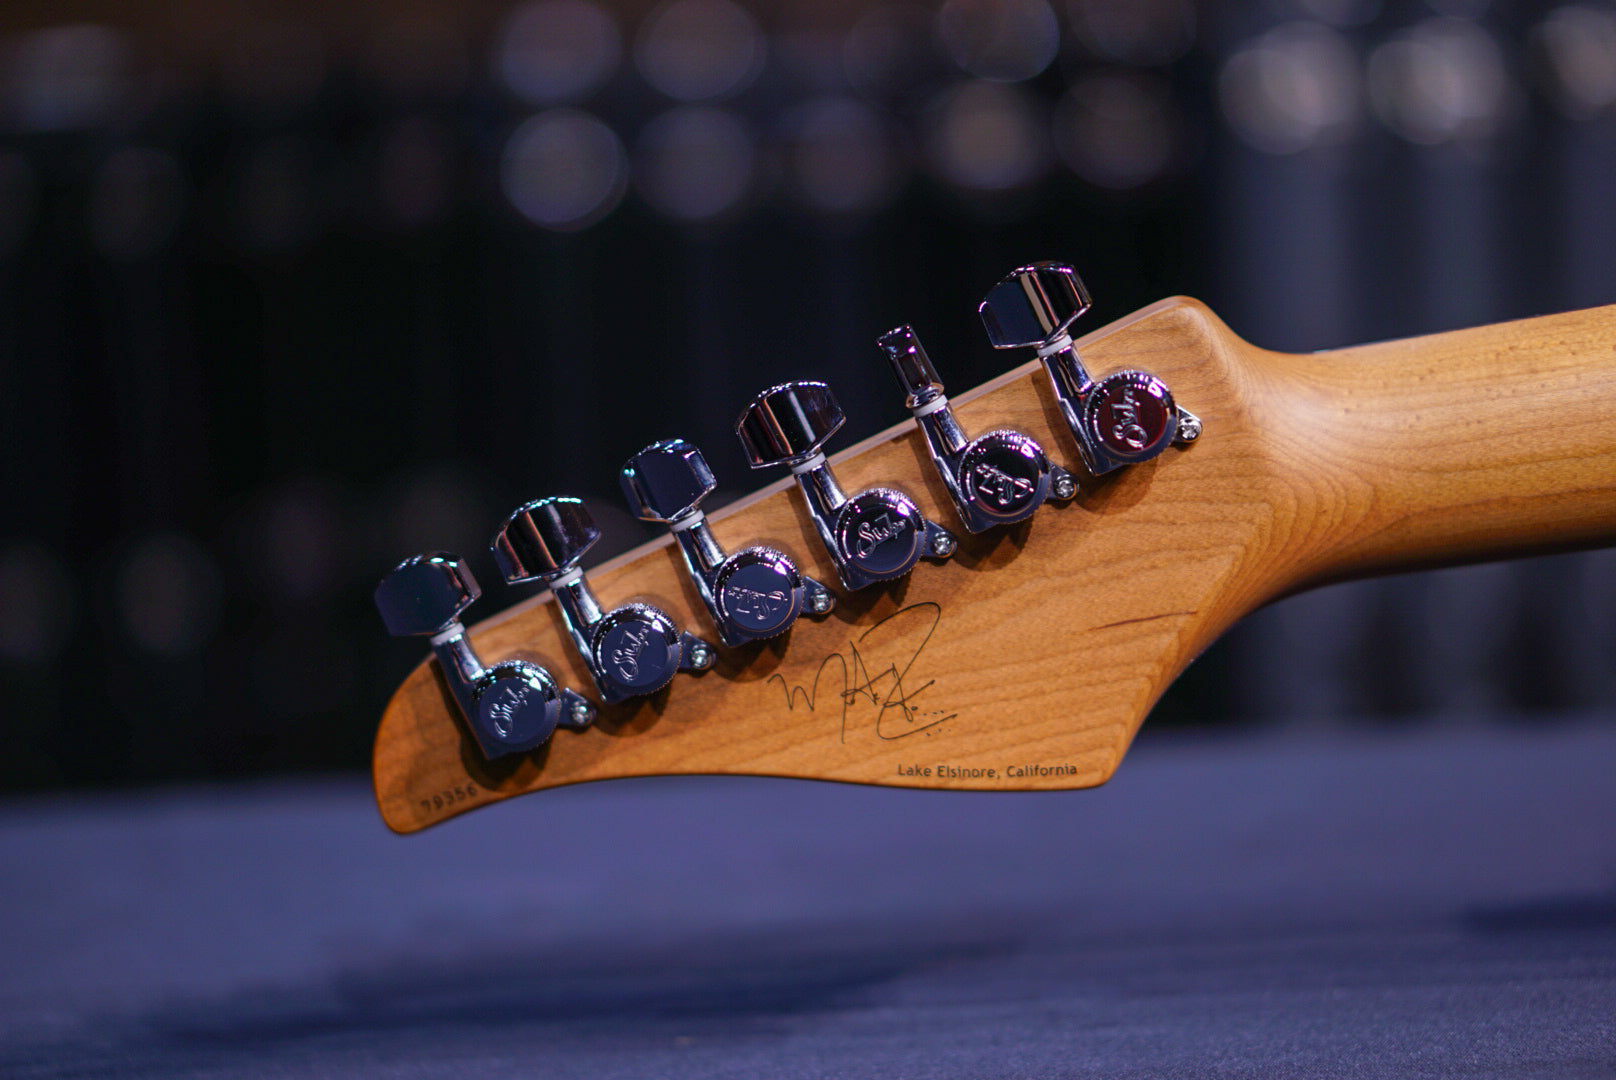 Suhr Mateus asato classic S shell pink 77344 - HIENDGUITAR   SUHR guitar